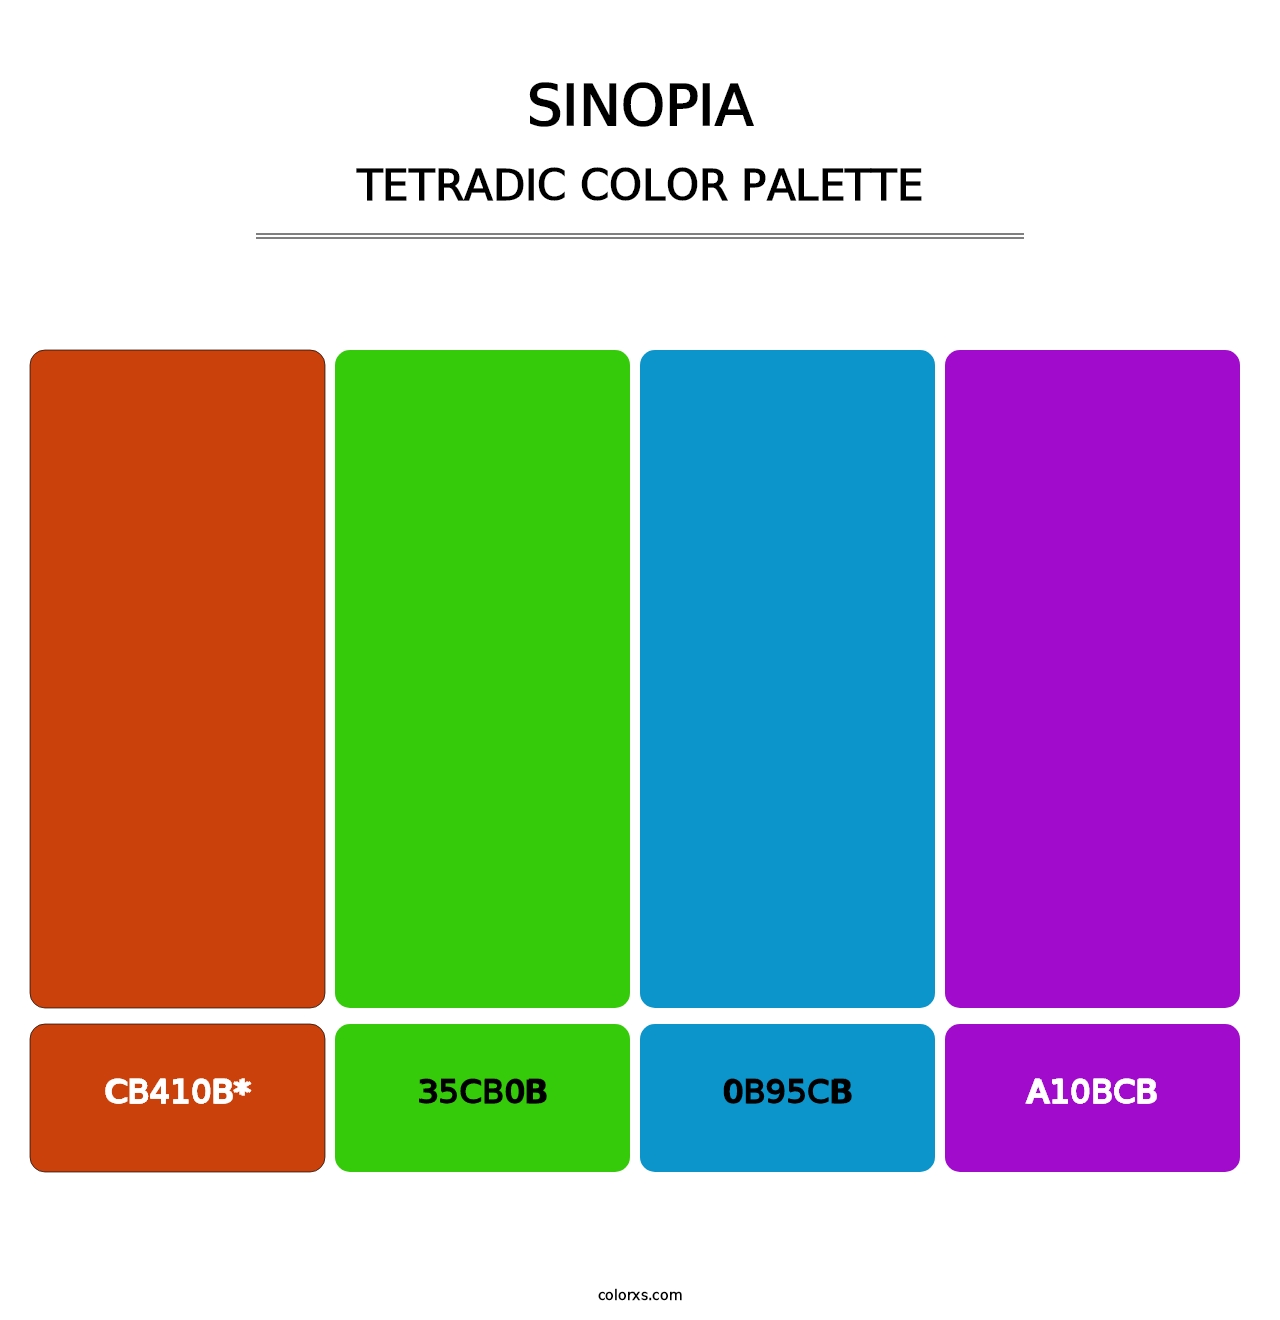 Sinopia - Tetradic Color Palette